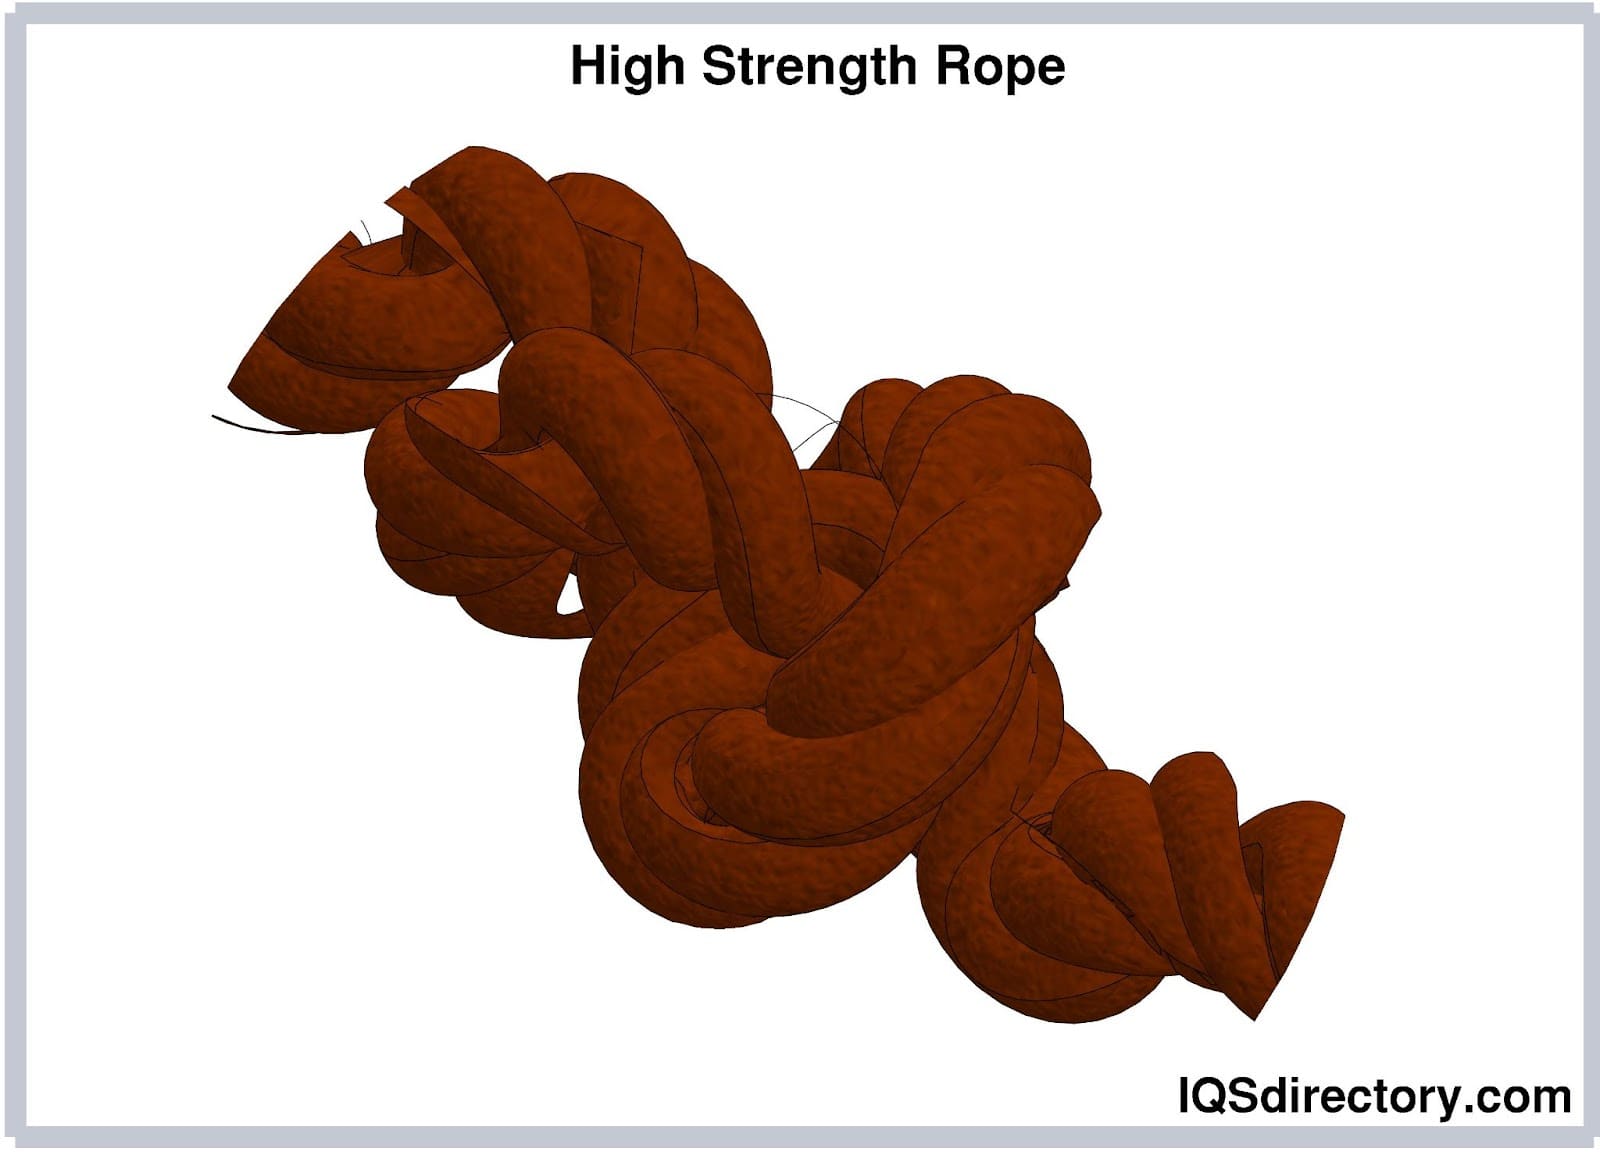 High Strength Rope